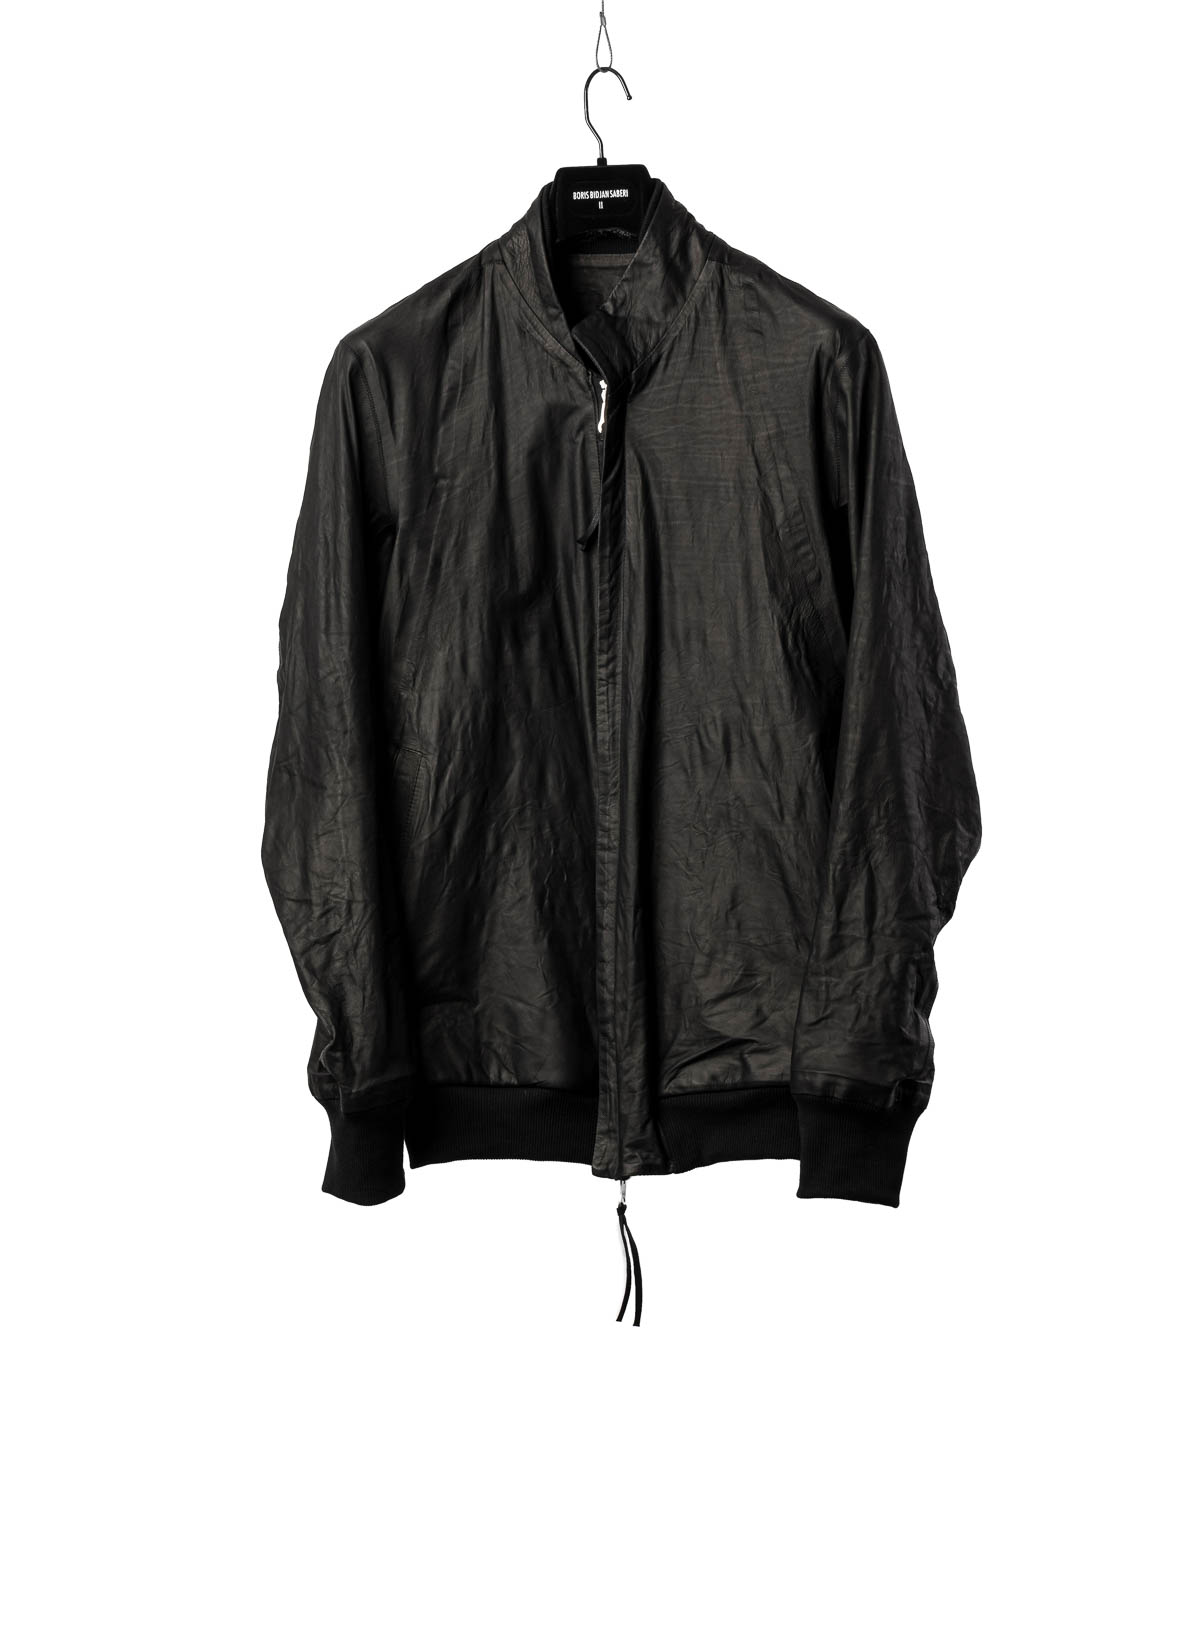 hide-m | BORIS BIDJAN SABERI Jacket J3 reversible, exclusively, black